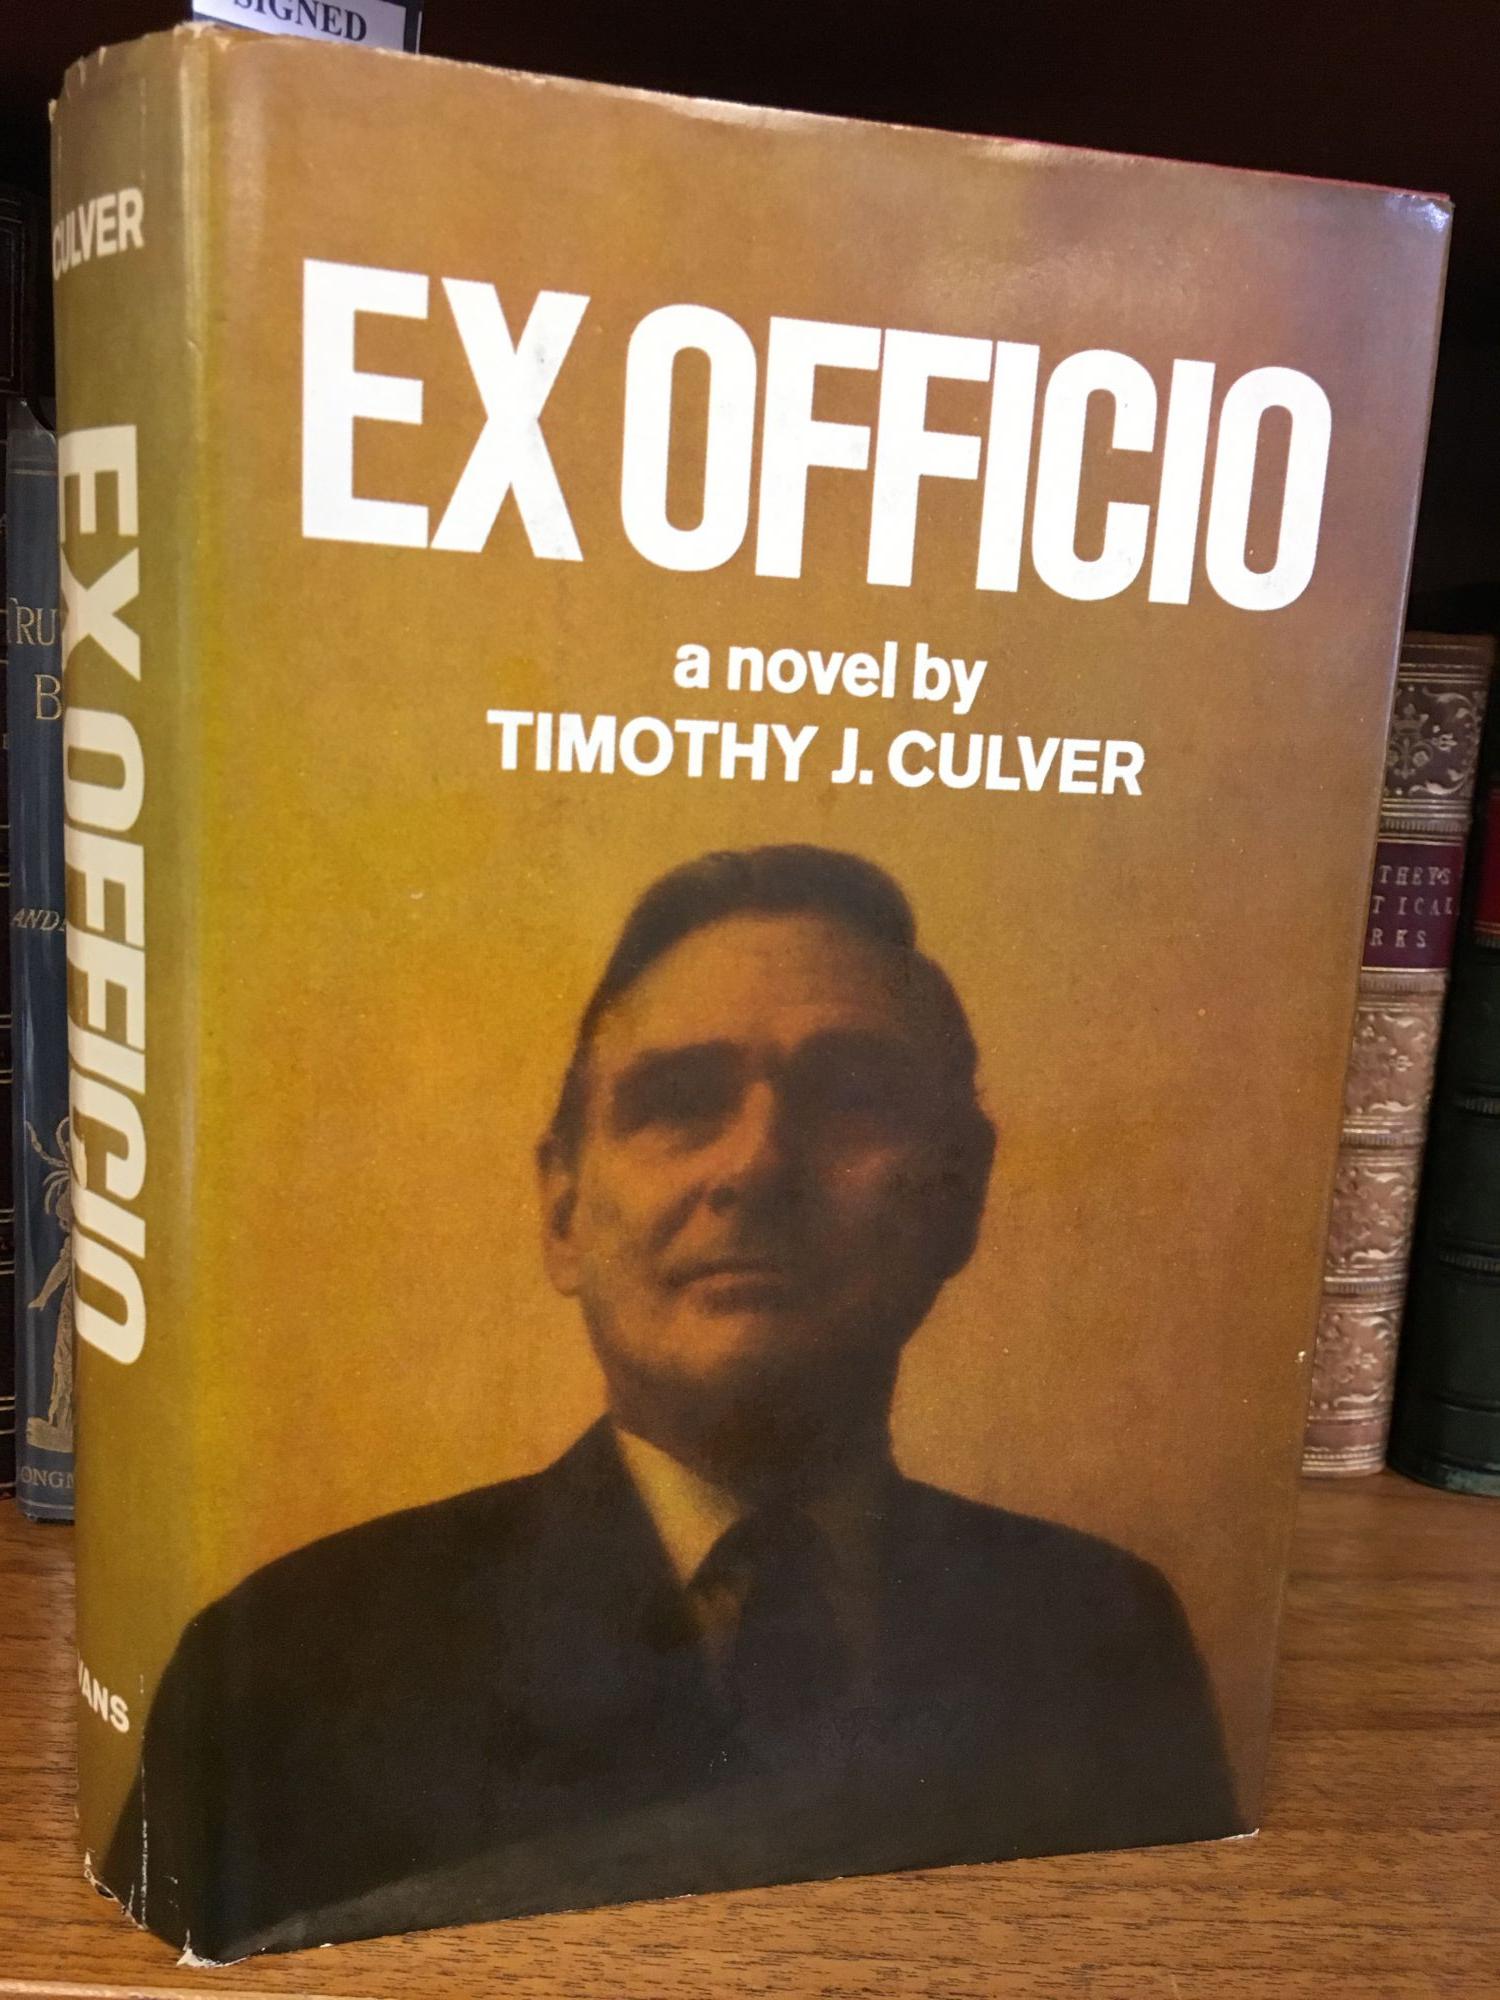 EX OFFICIO SIGNED, Timothy J. Culver